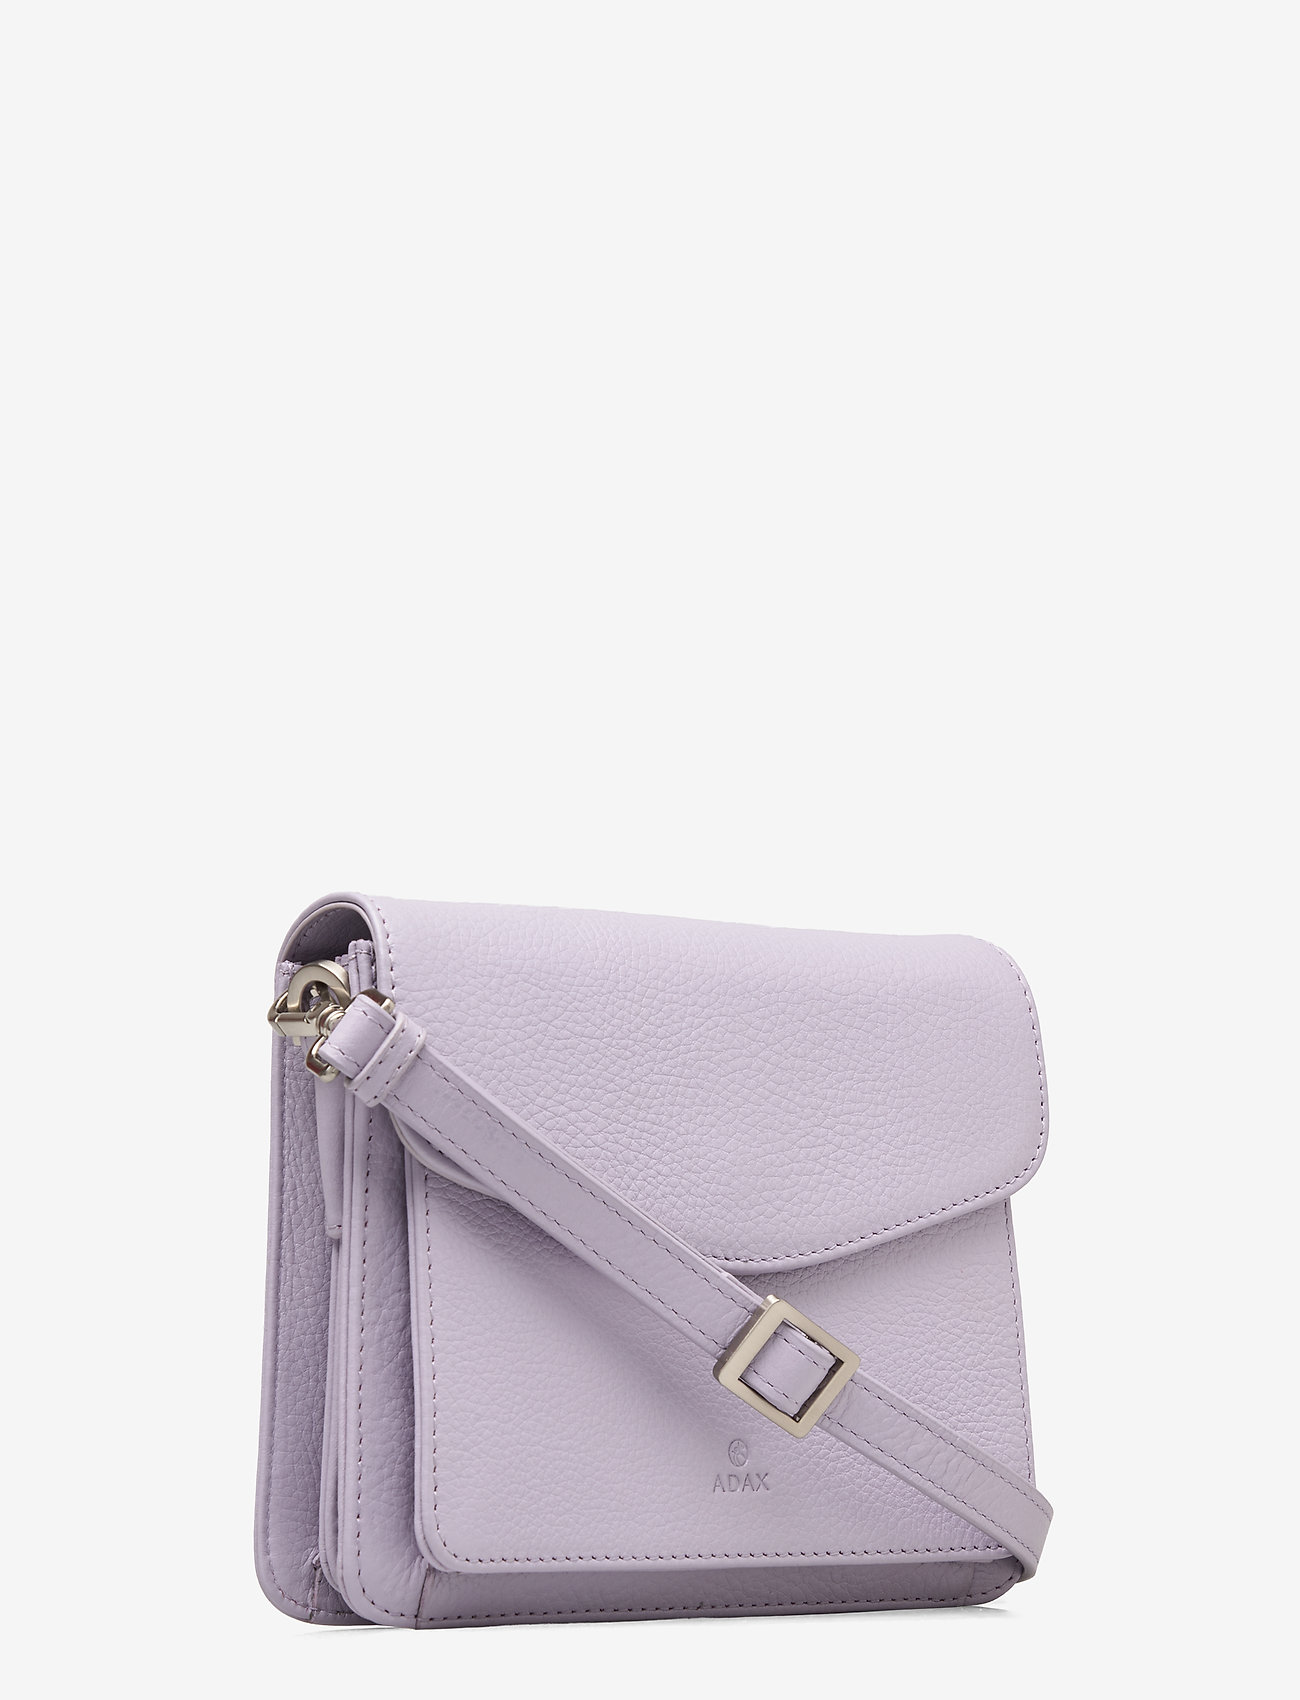 Adax - Cormorano shoulder bag Thea - light purple - 1